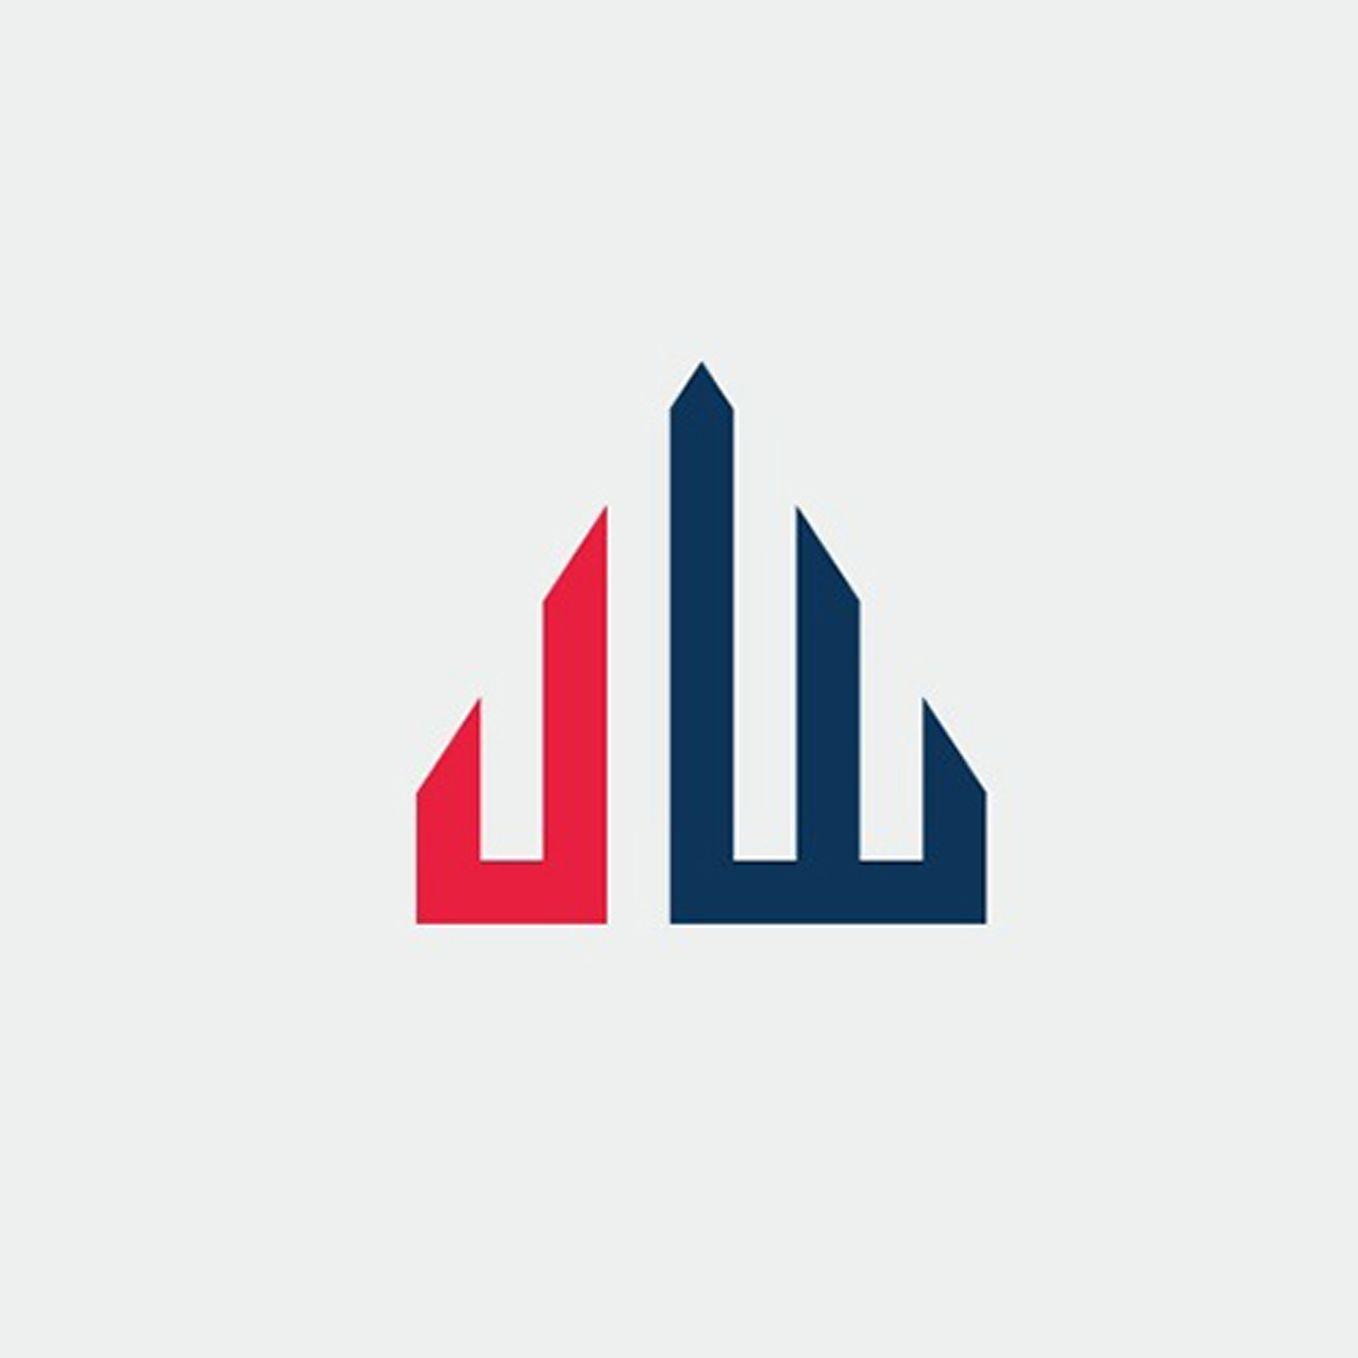 John Wall Logo - John Wall (Basket) | Logotipo de Deportistas | John wall, NBA y ...